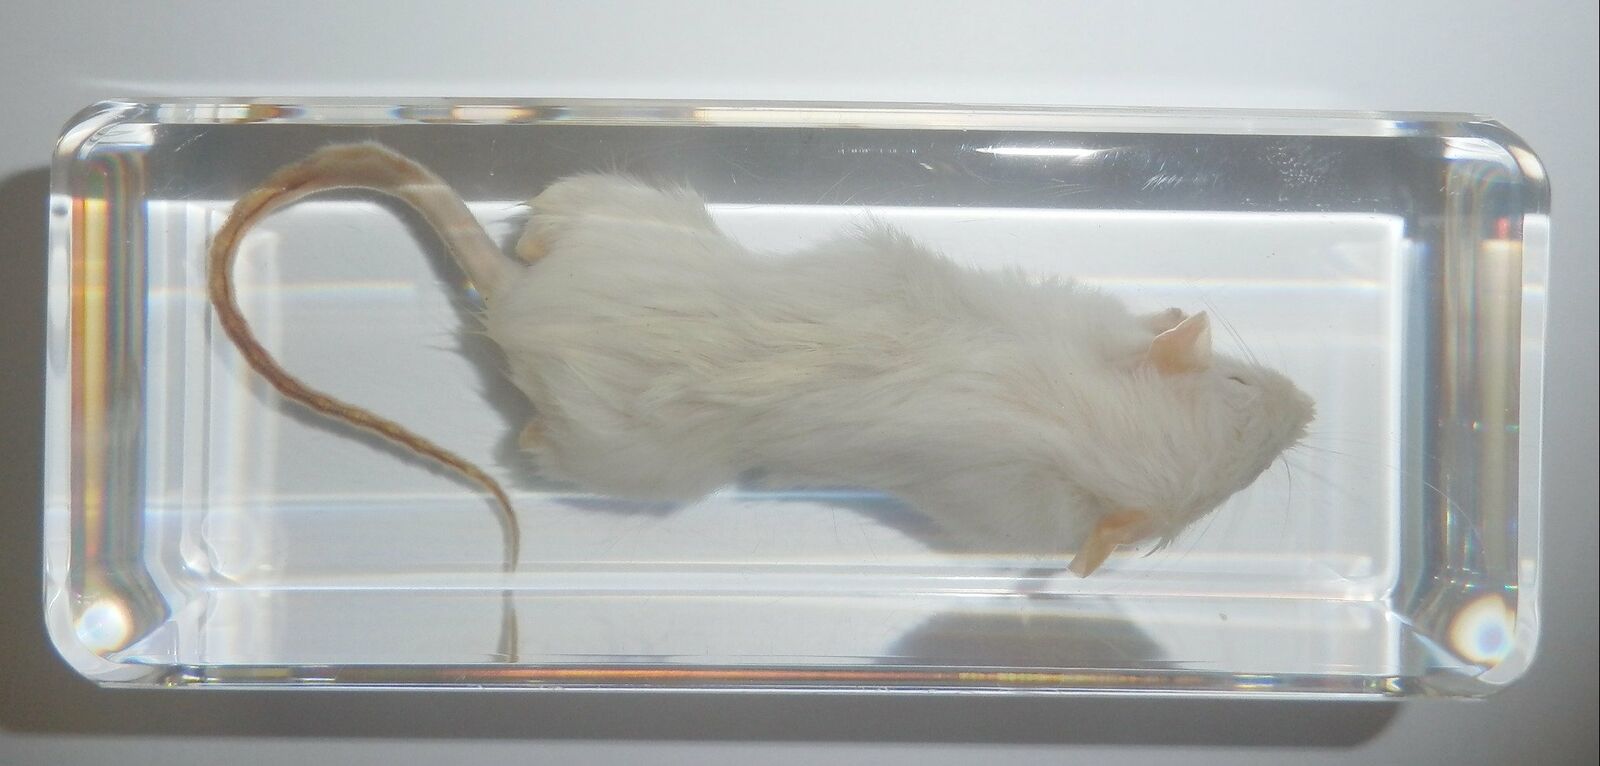 White Mouse Laboratory Rat Rattus norvegicus Clear Education Animal Specimen